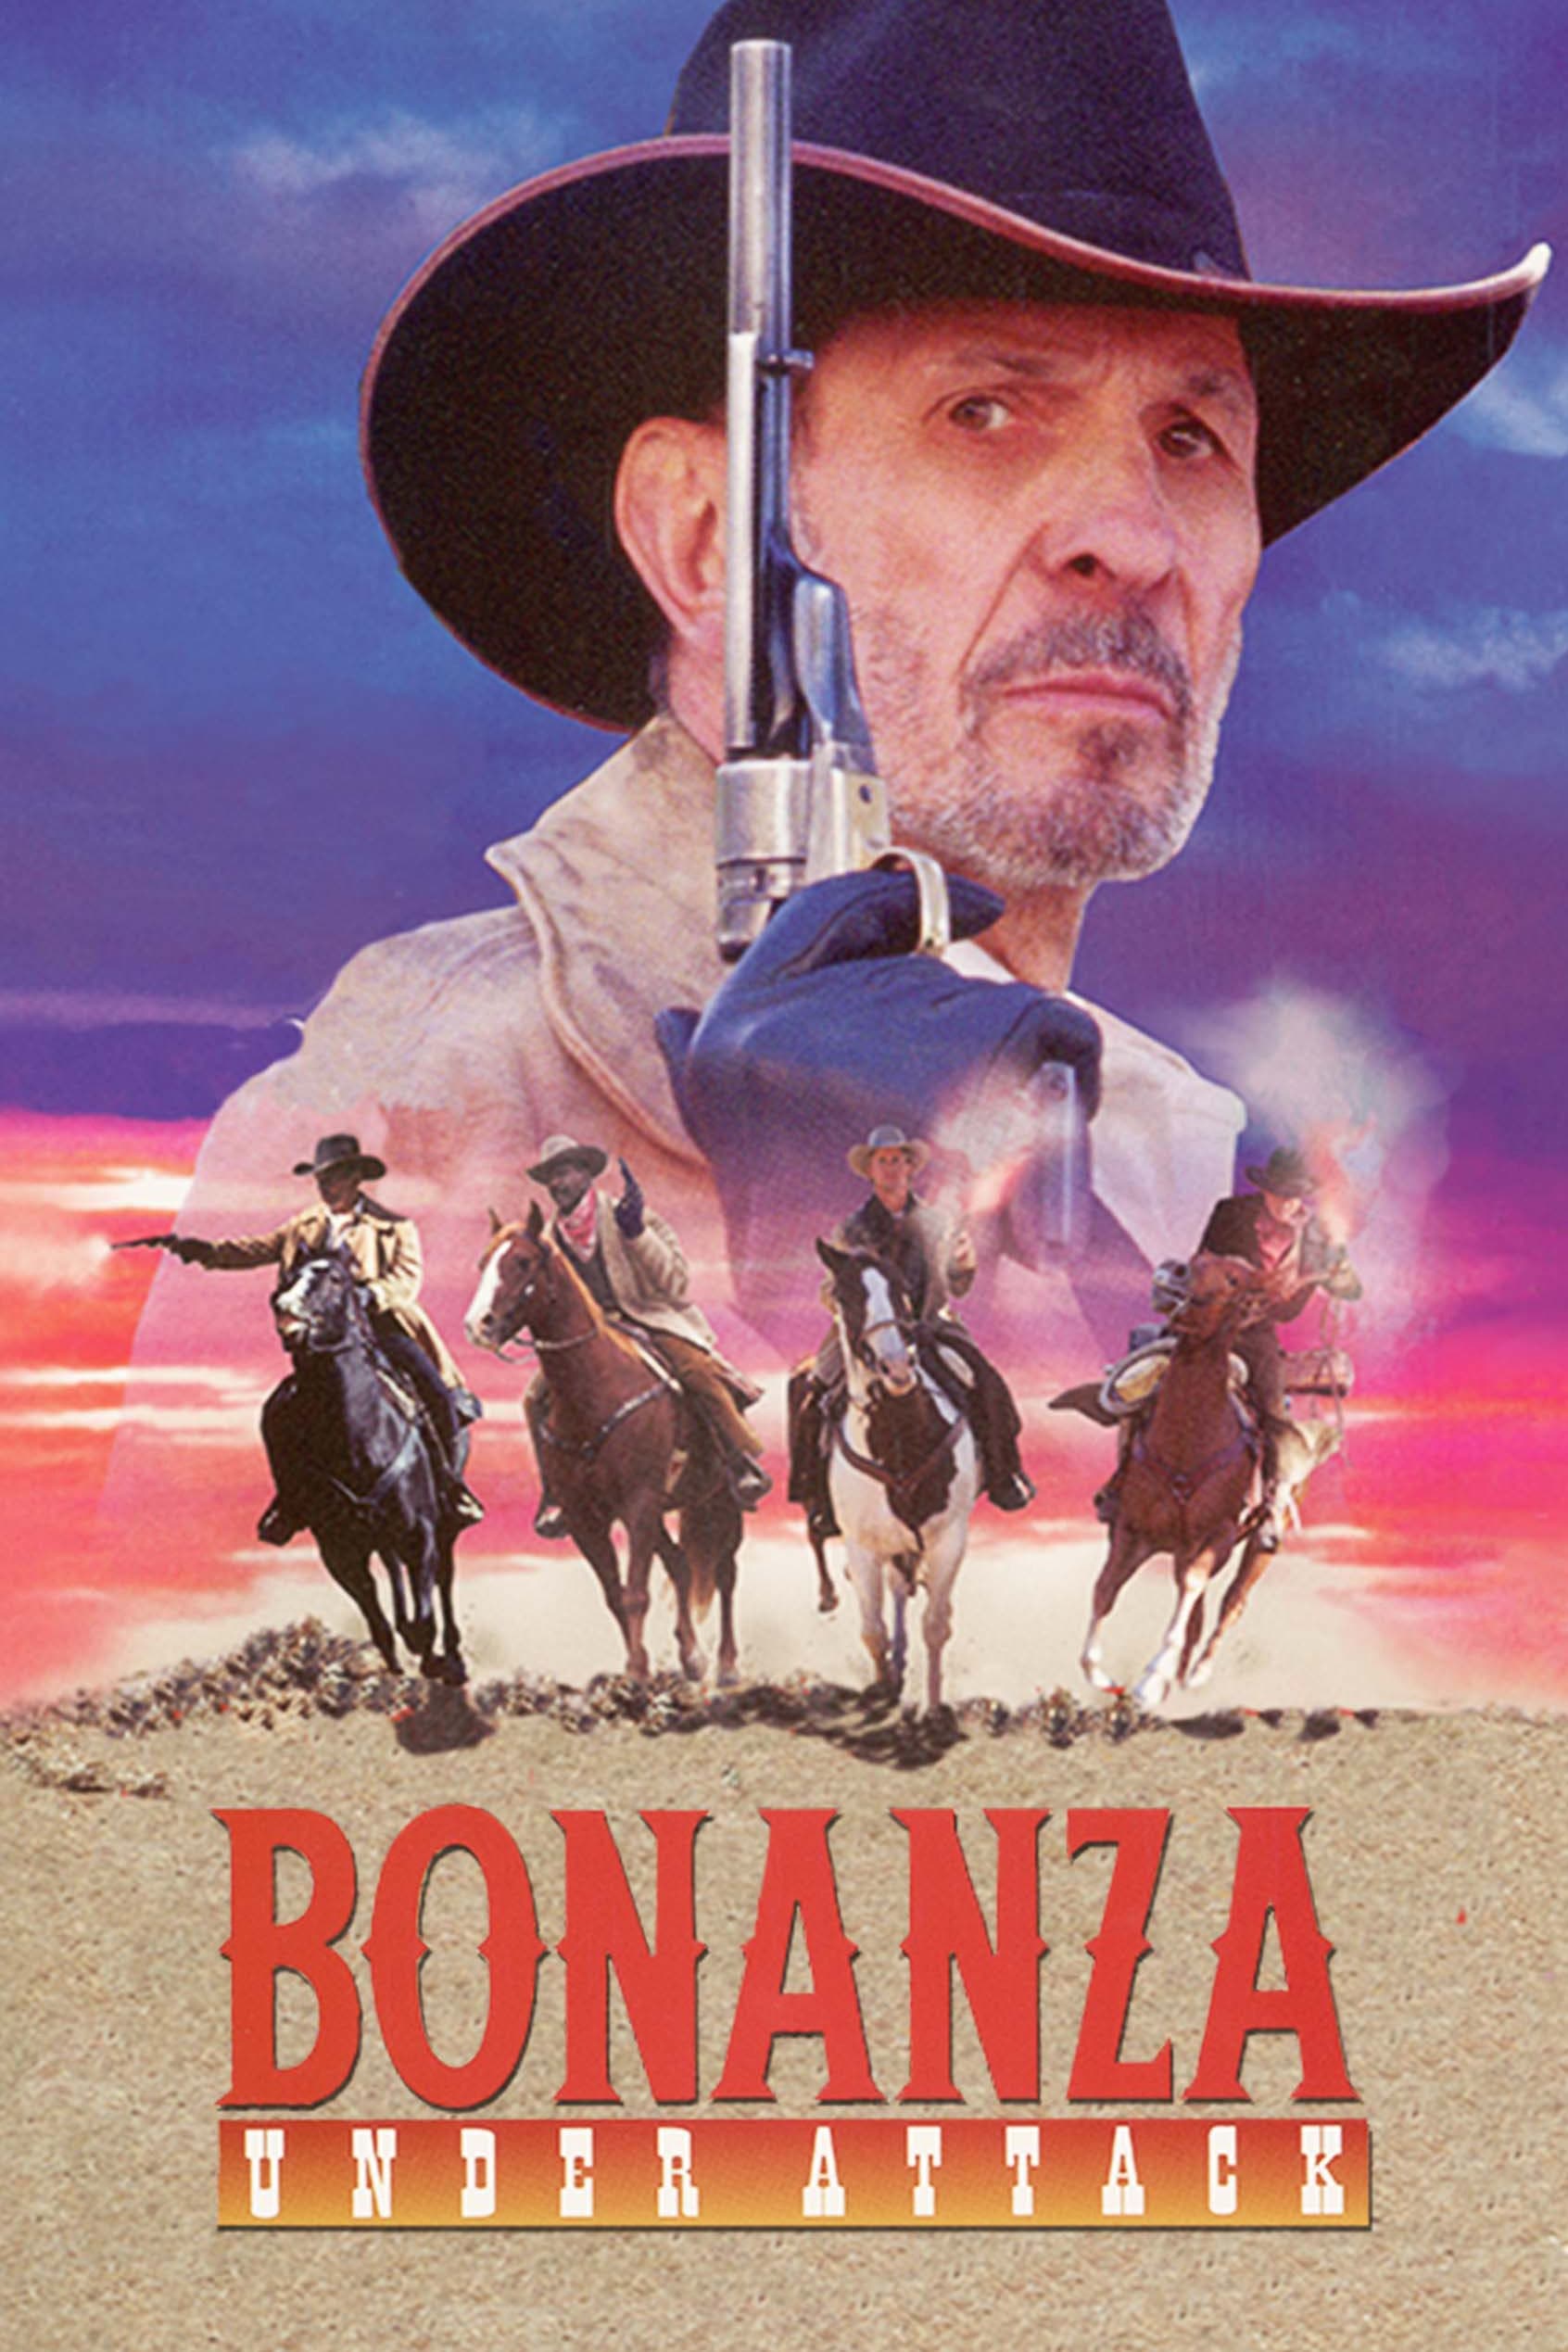 Bonanza: Under Attack (1995)